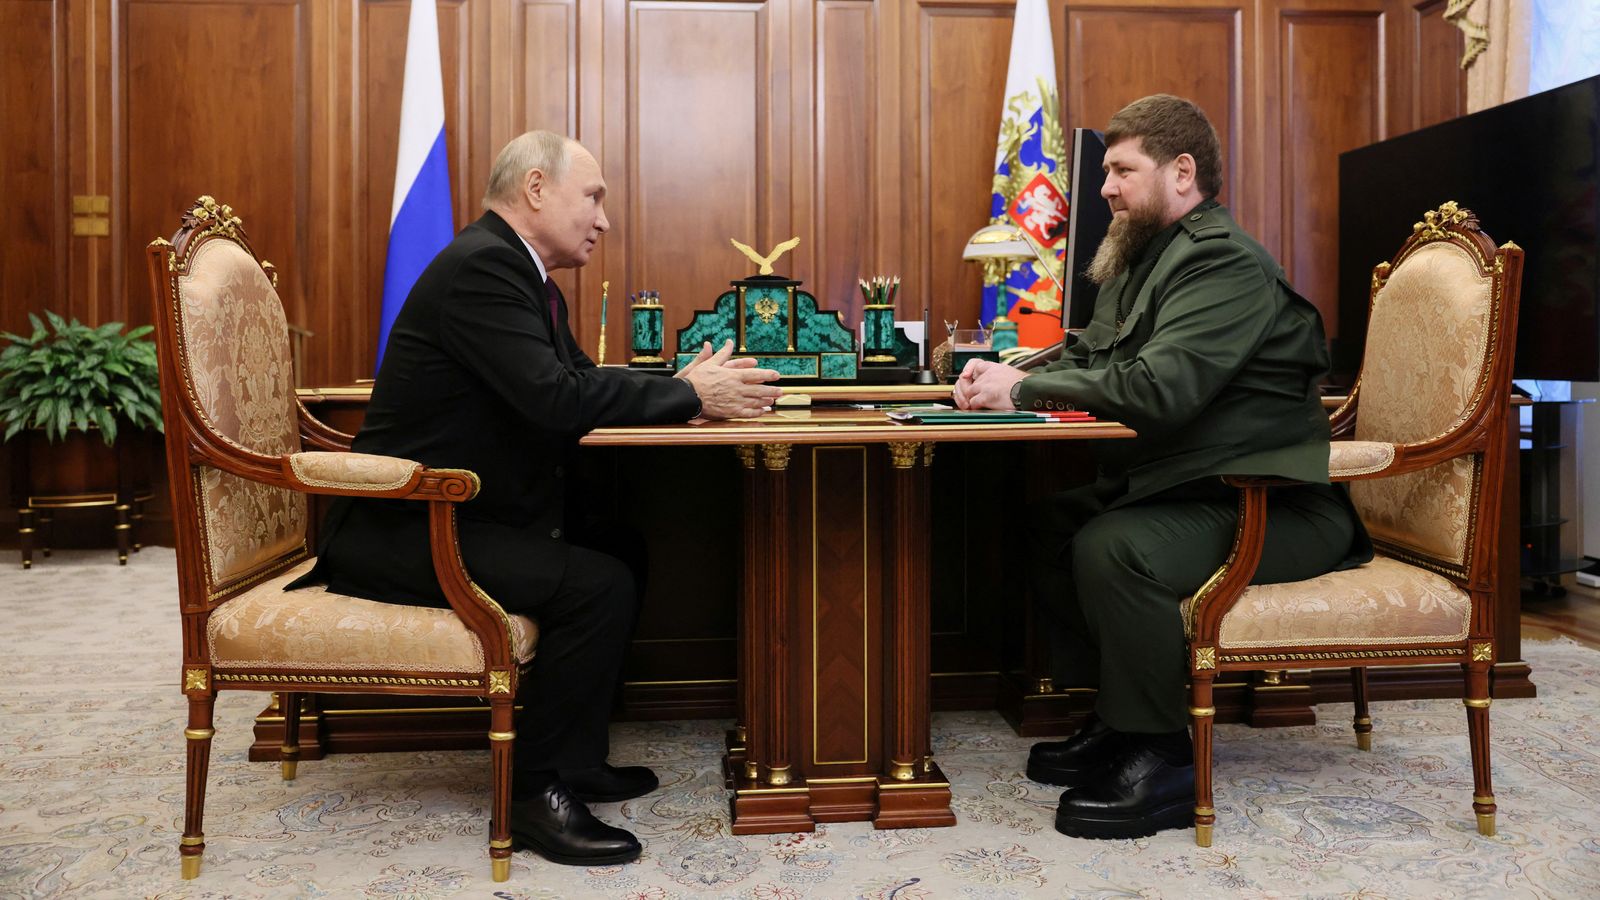 Kremlin releases video showing Vladimir Putin with Chechen leader Ramzan Kadyrov after rumours of ill health